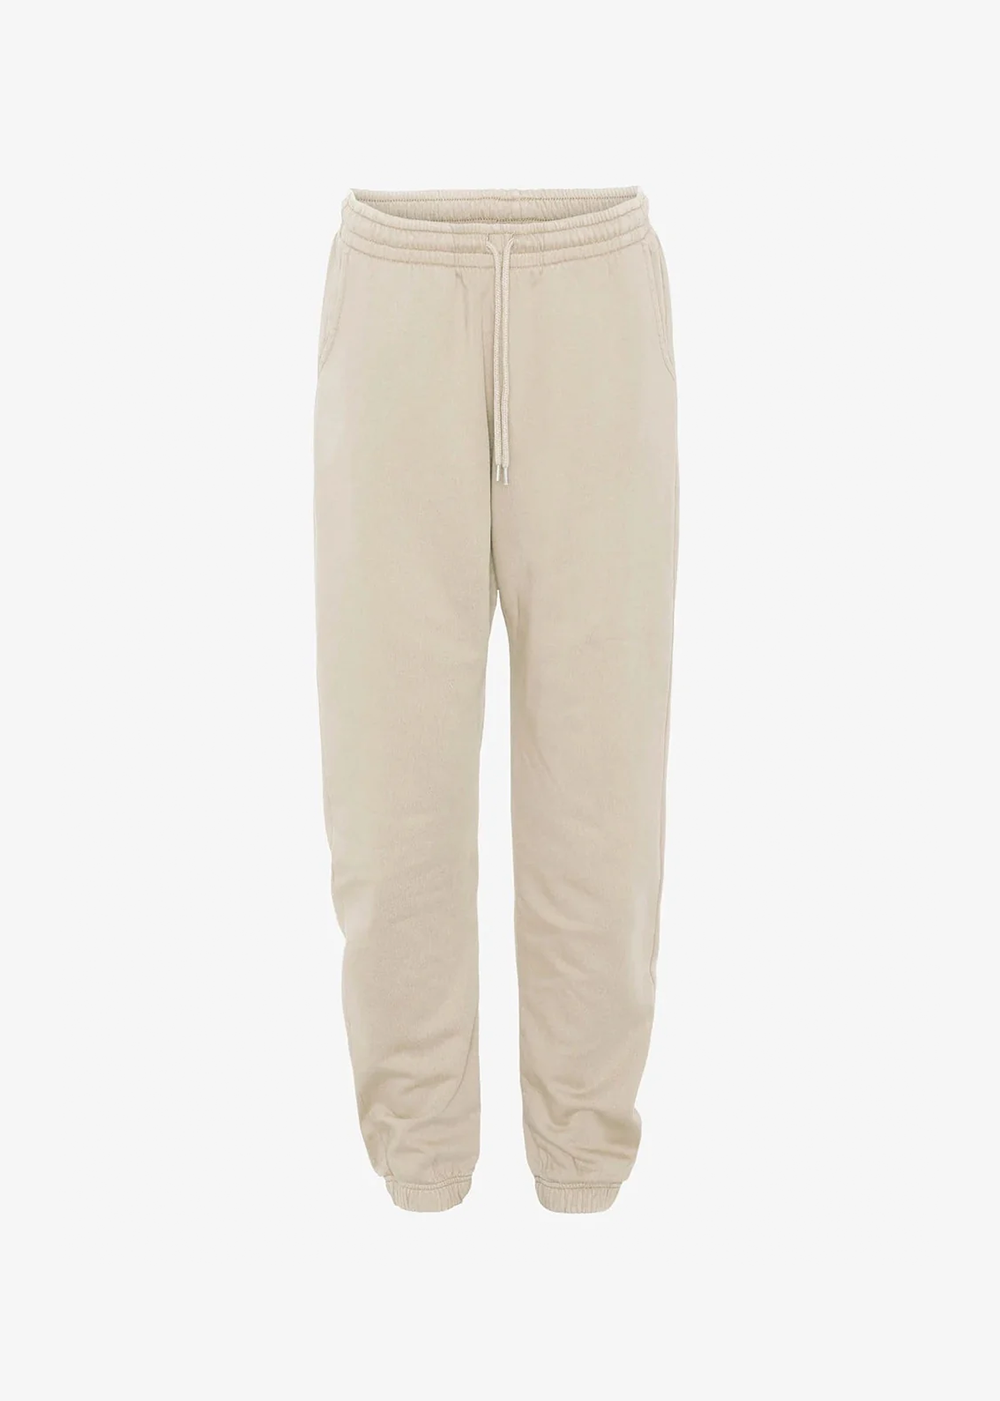 Organic Sweatpants - Ivory White - Colorful Standard Canada - Danali